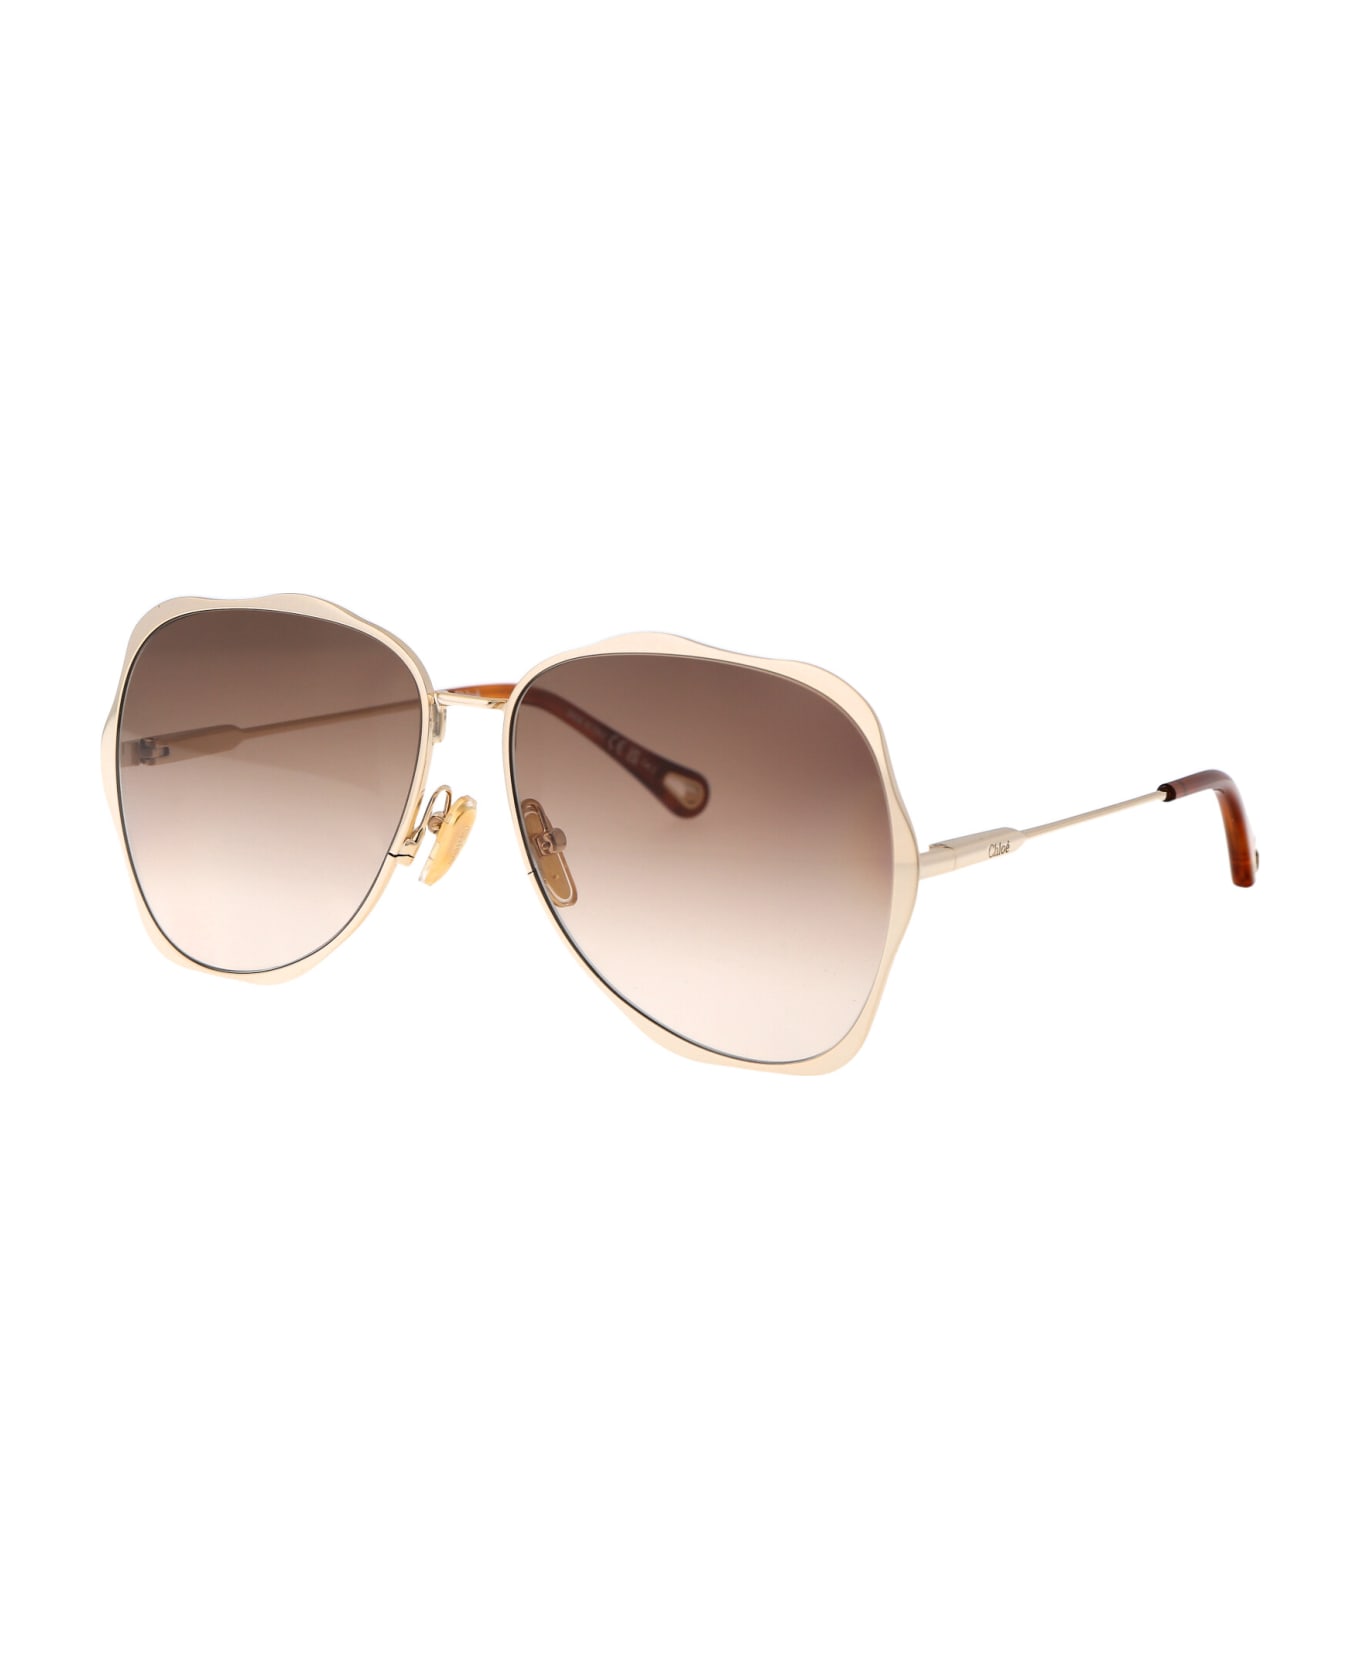 Chloé Eyewear Ch0177s Sunglasses - 002 GOLD GOLD BROWN サングラス